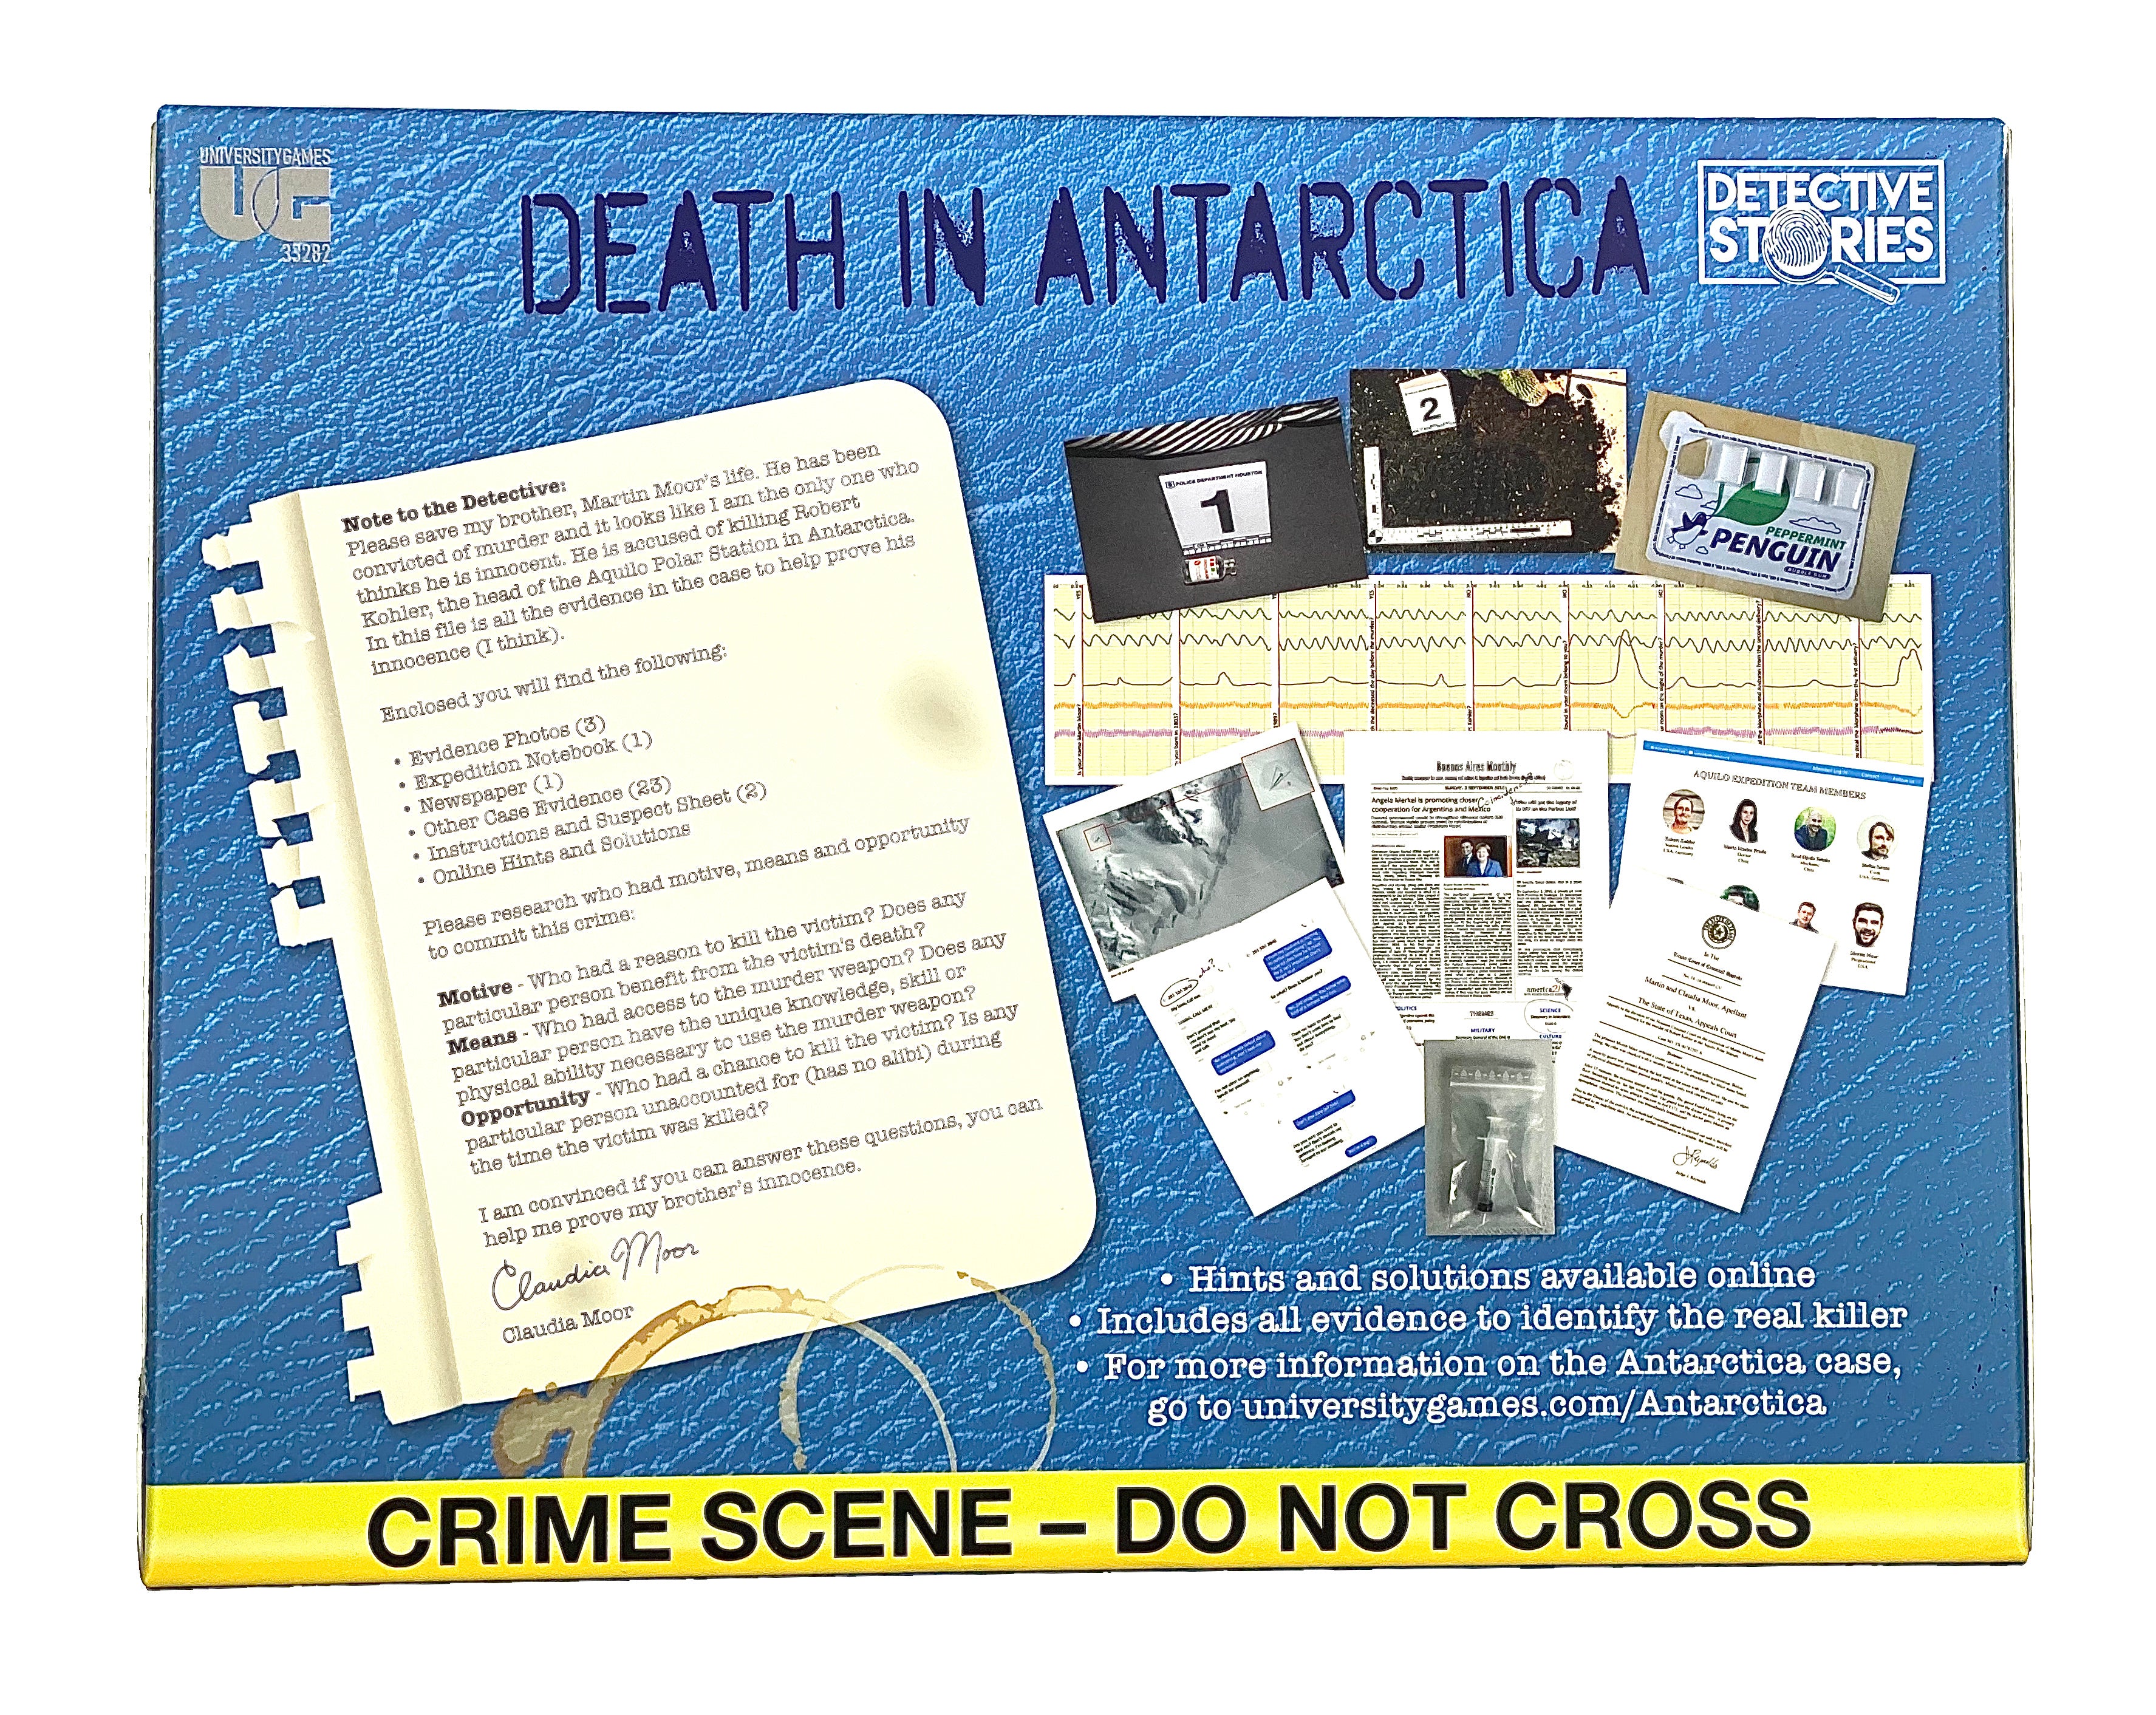 Murder Mystery Case Files Death in Antarctica Game